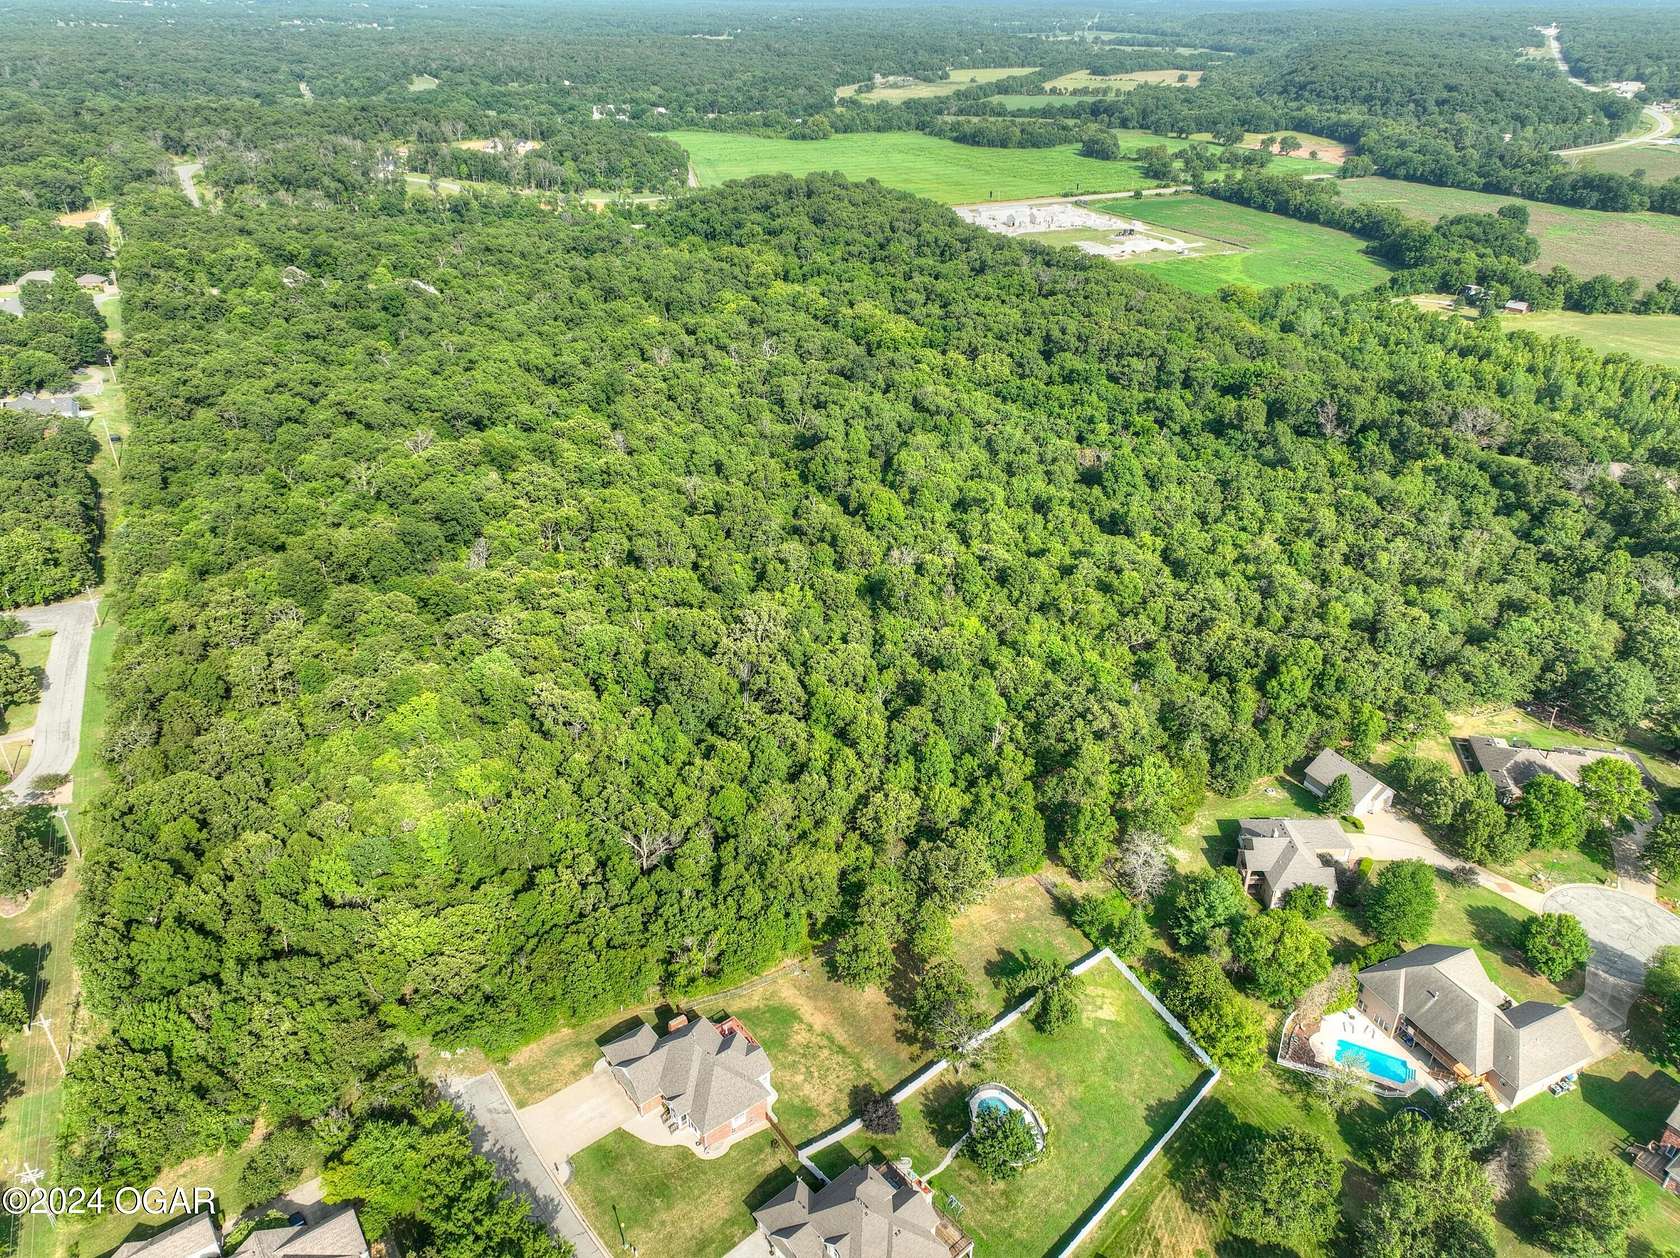 39 Acres of Recreational Land for Sale in Joplin, Missouri